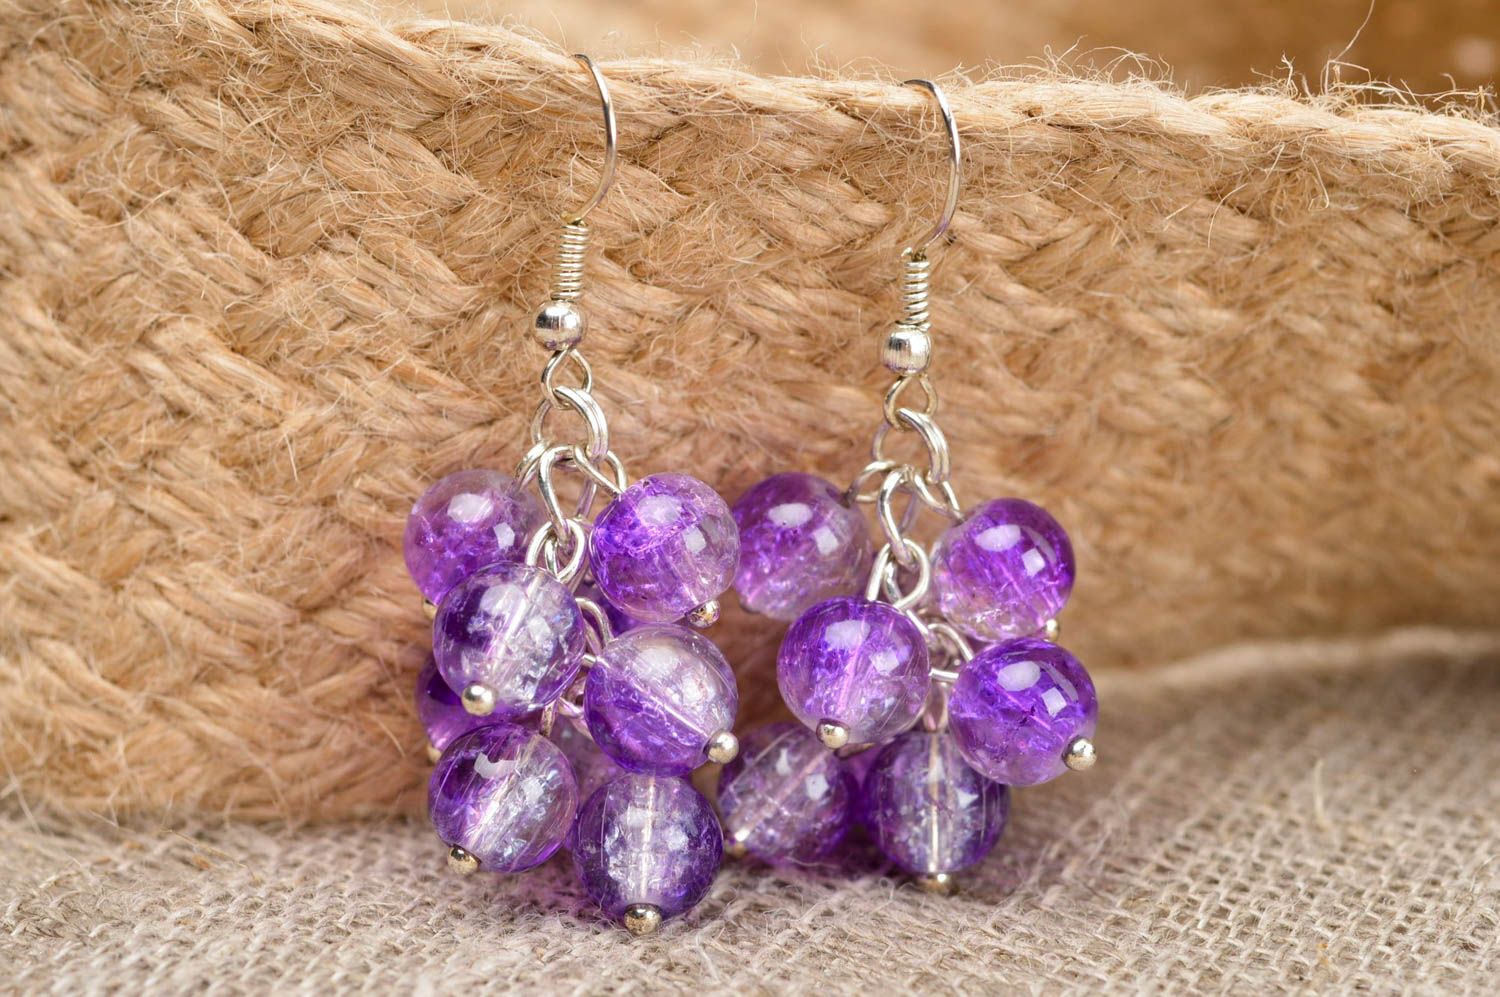 Handmade earrings designer accessory gift ideas unusual jewelry beads earrings photo 1